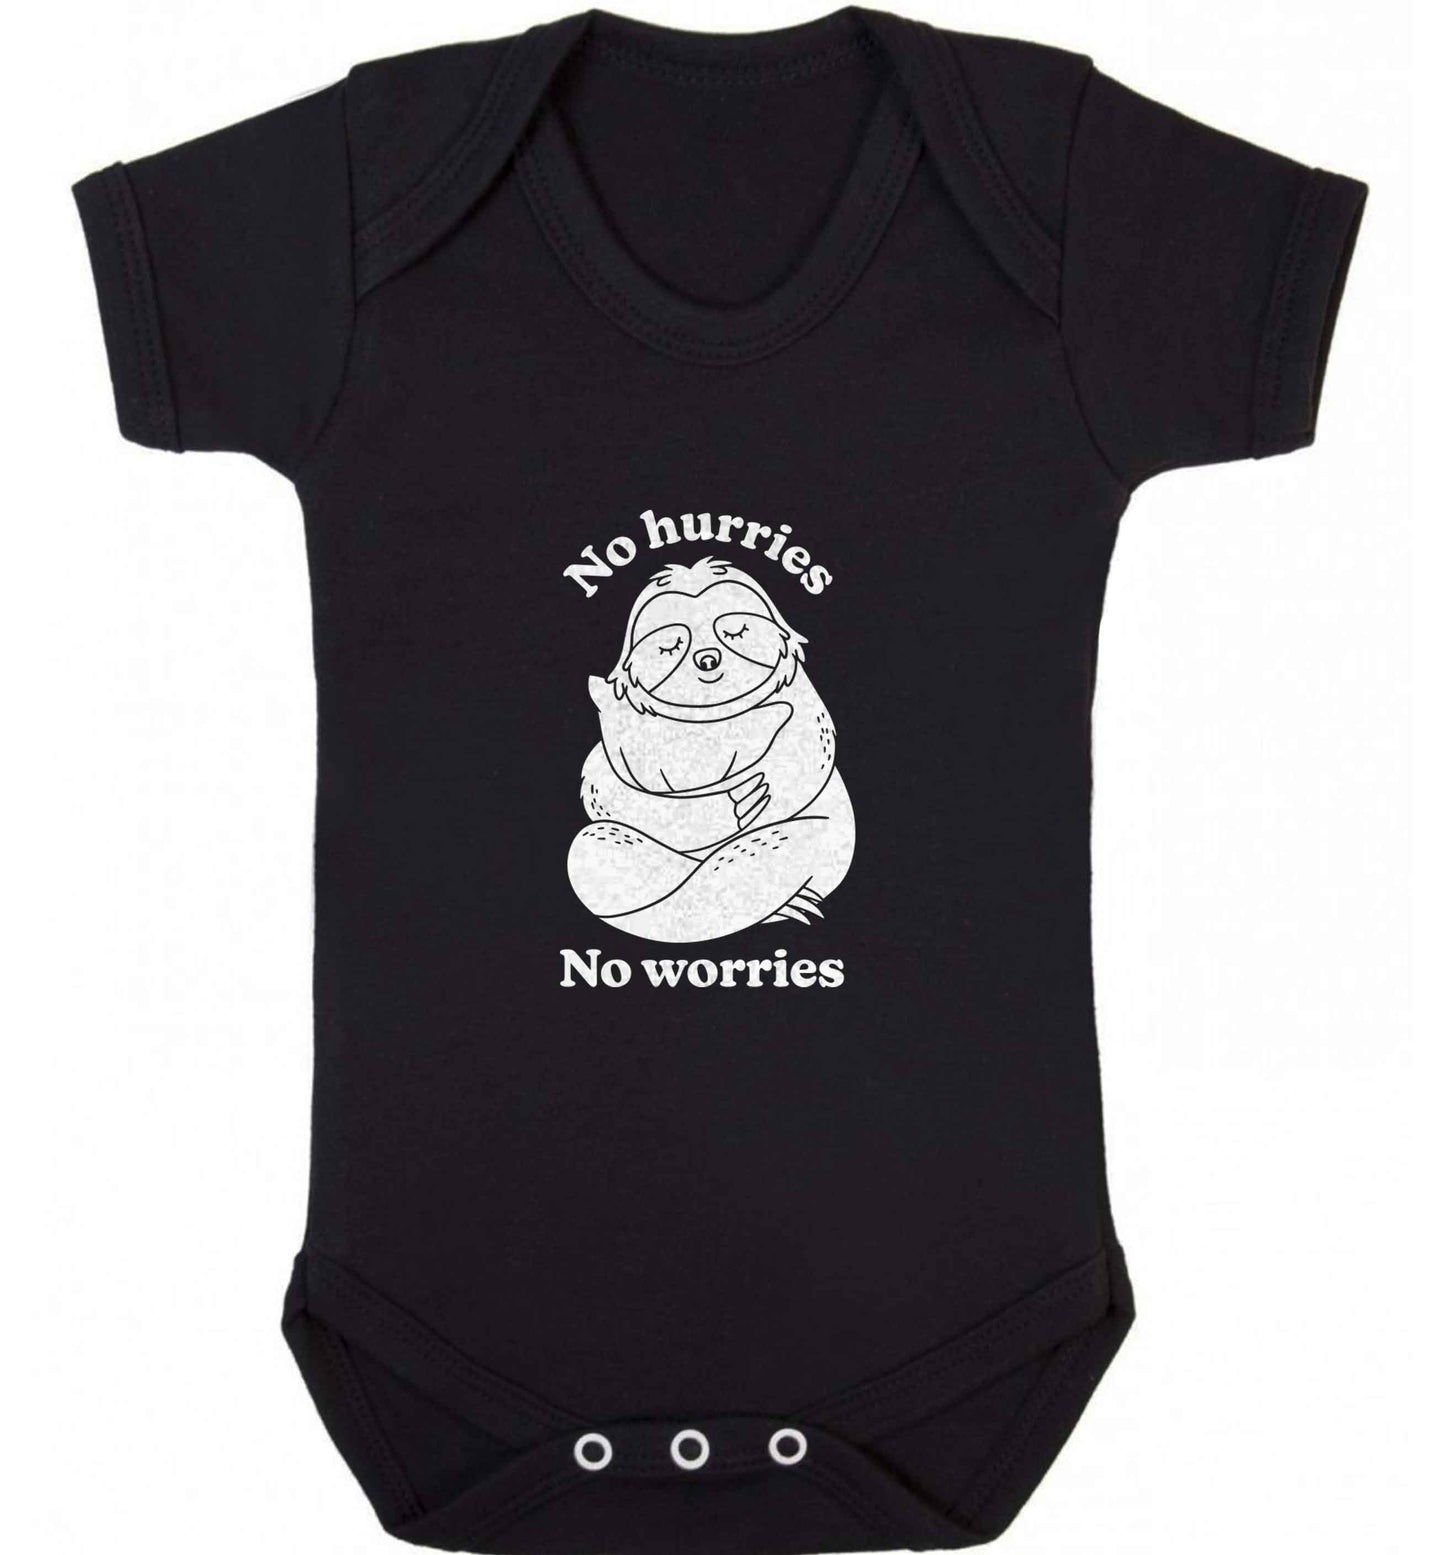 No hurries no worries baby vest black 18-24 months